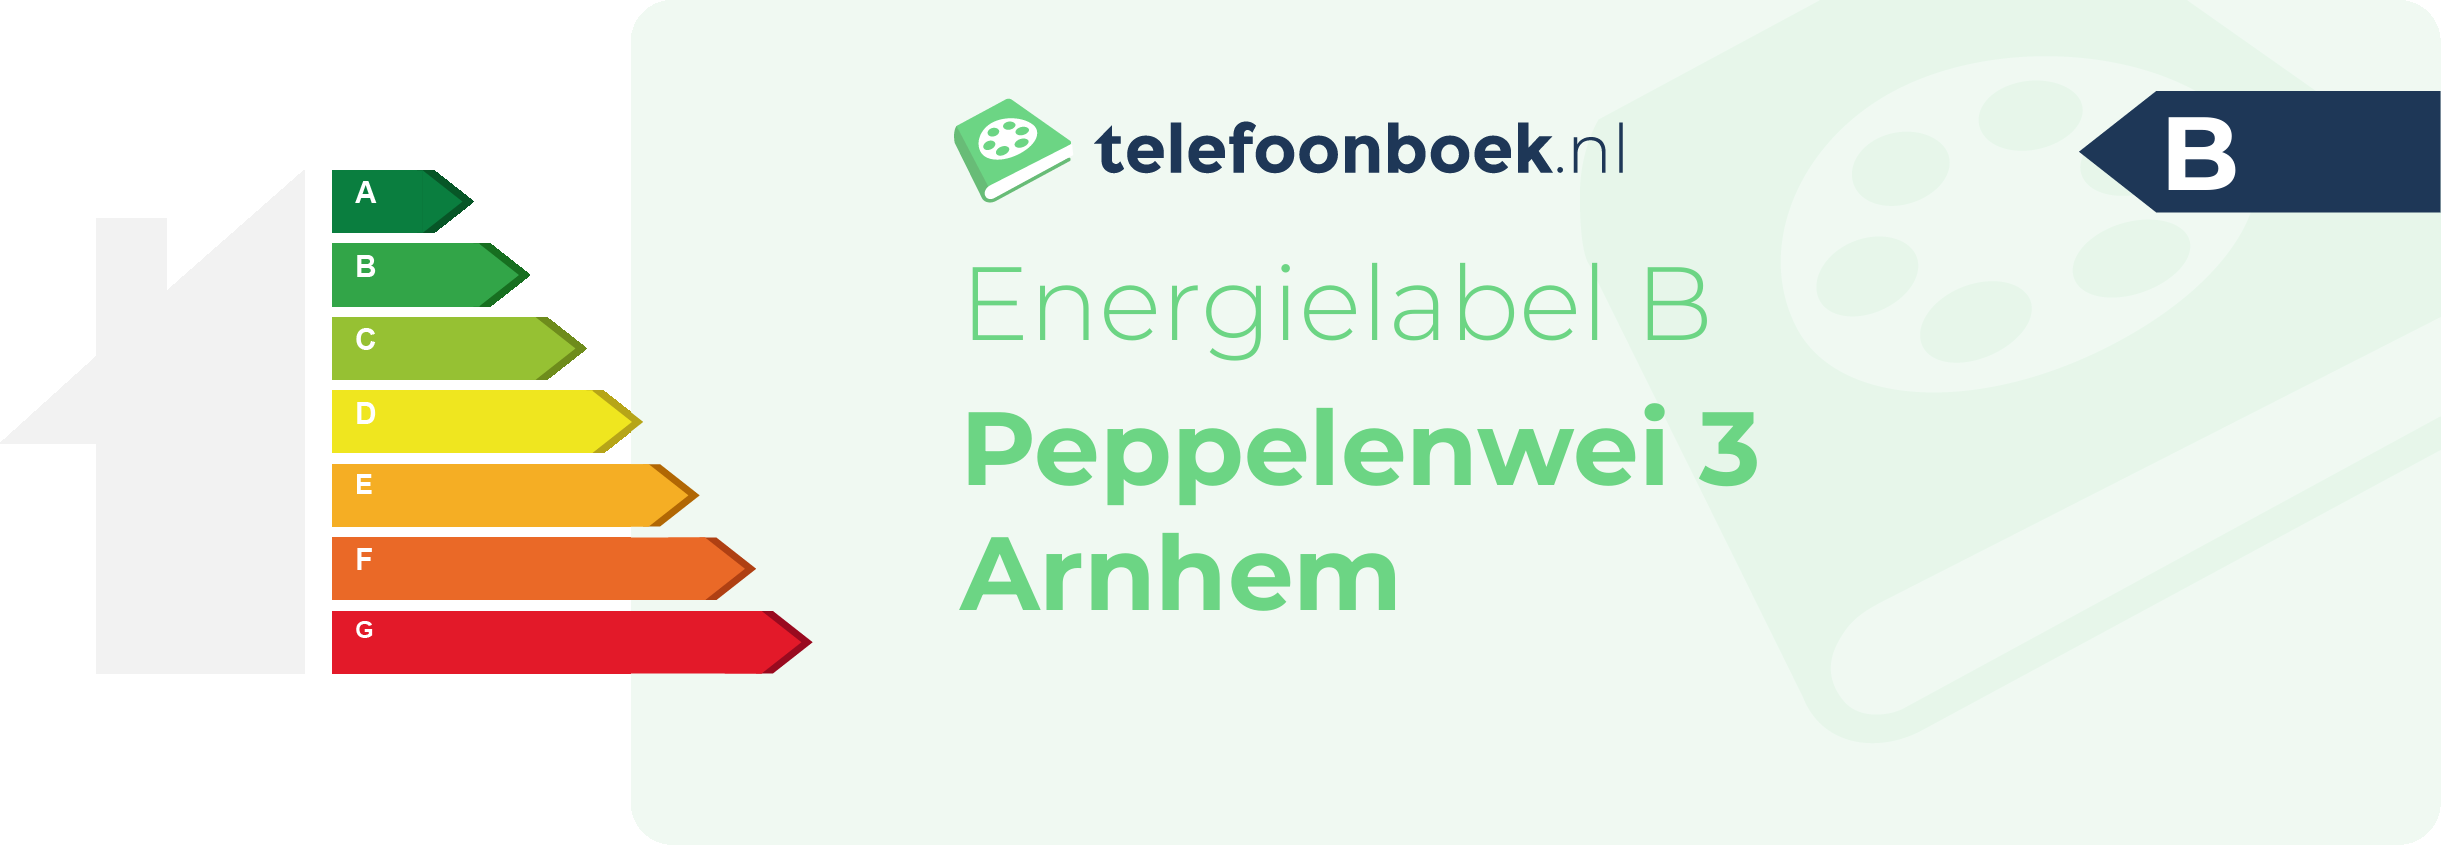 Energielabel Peppelenwei 3 Arnhem